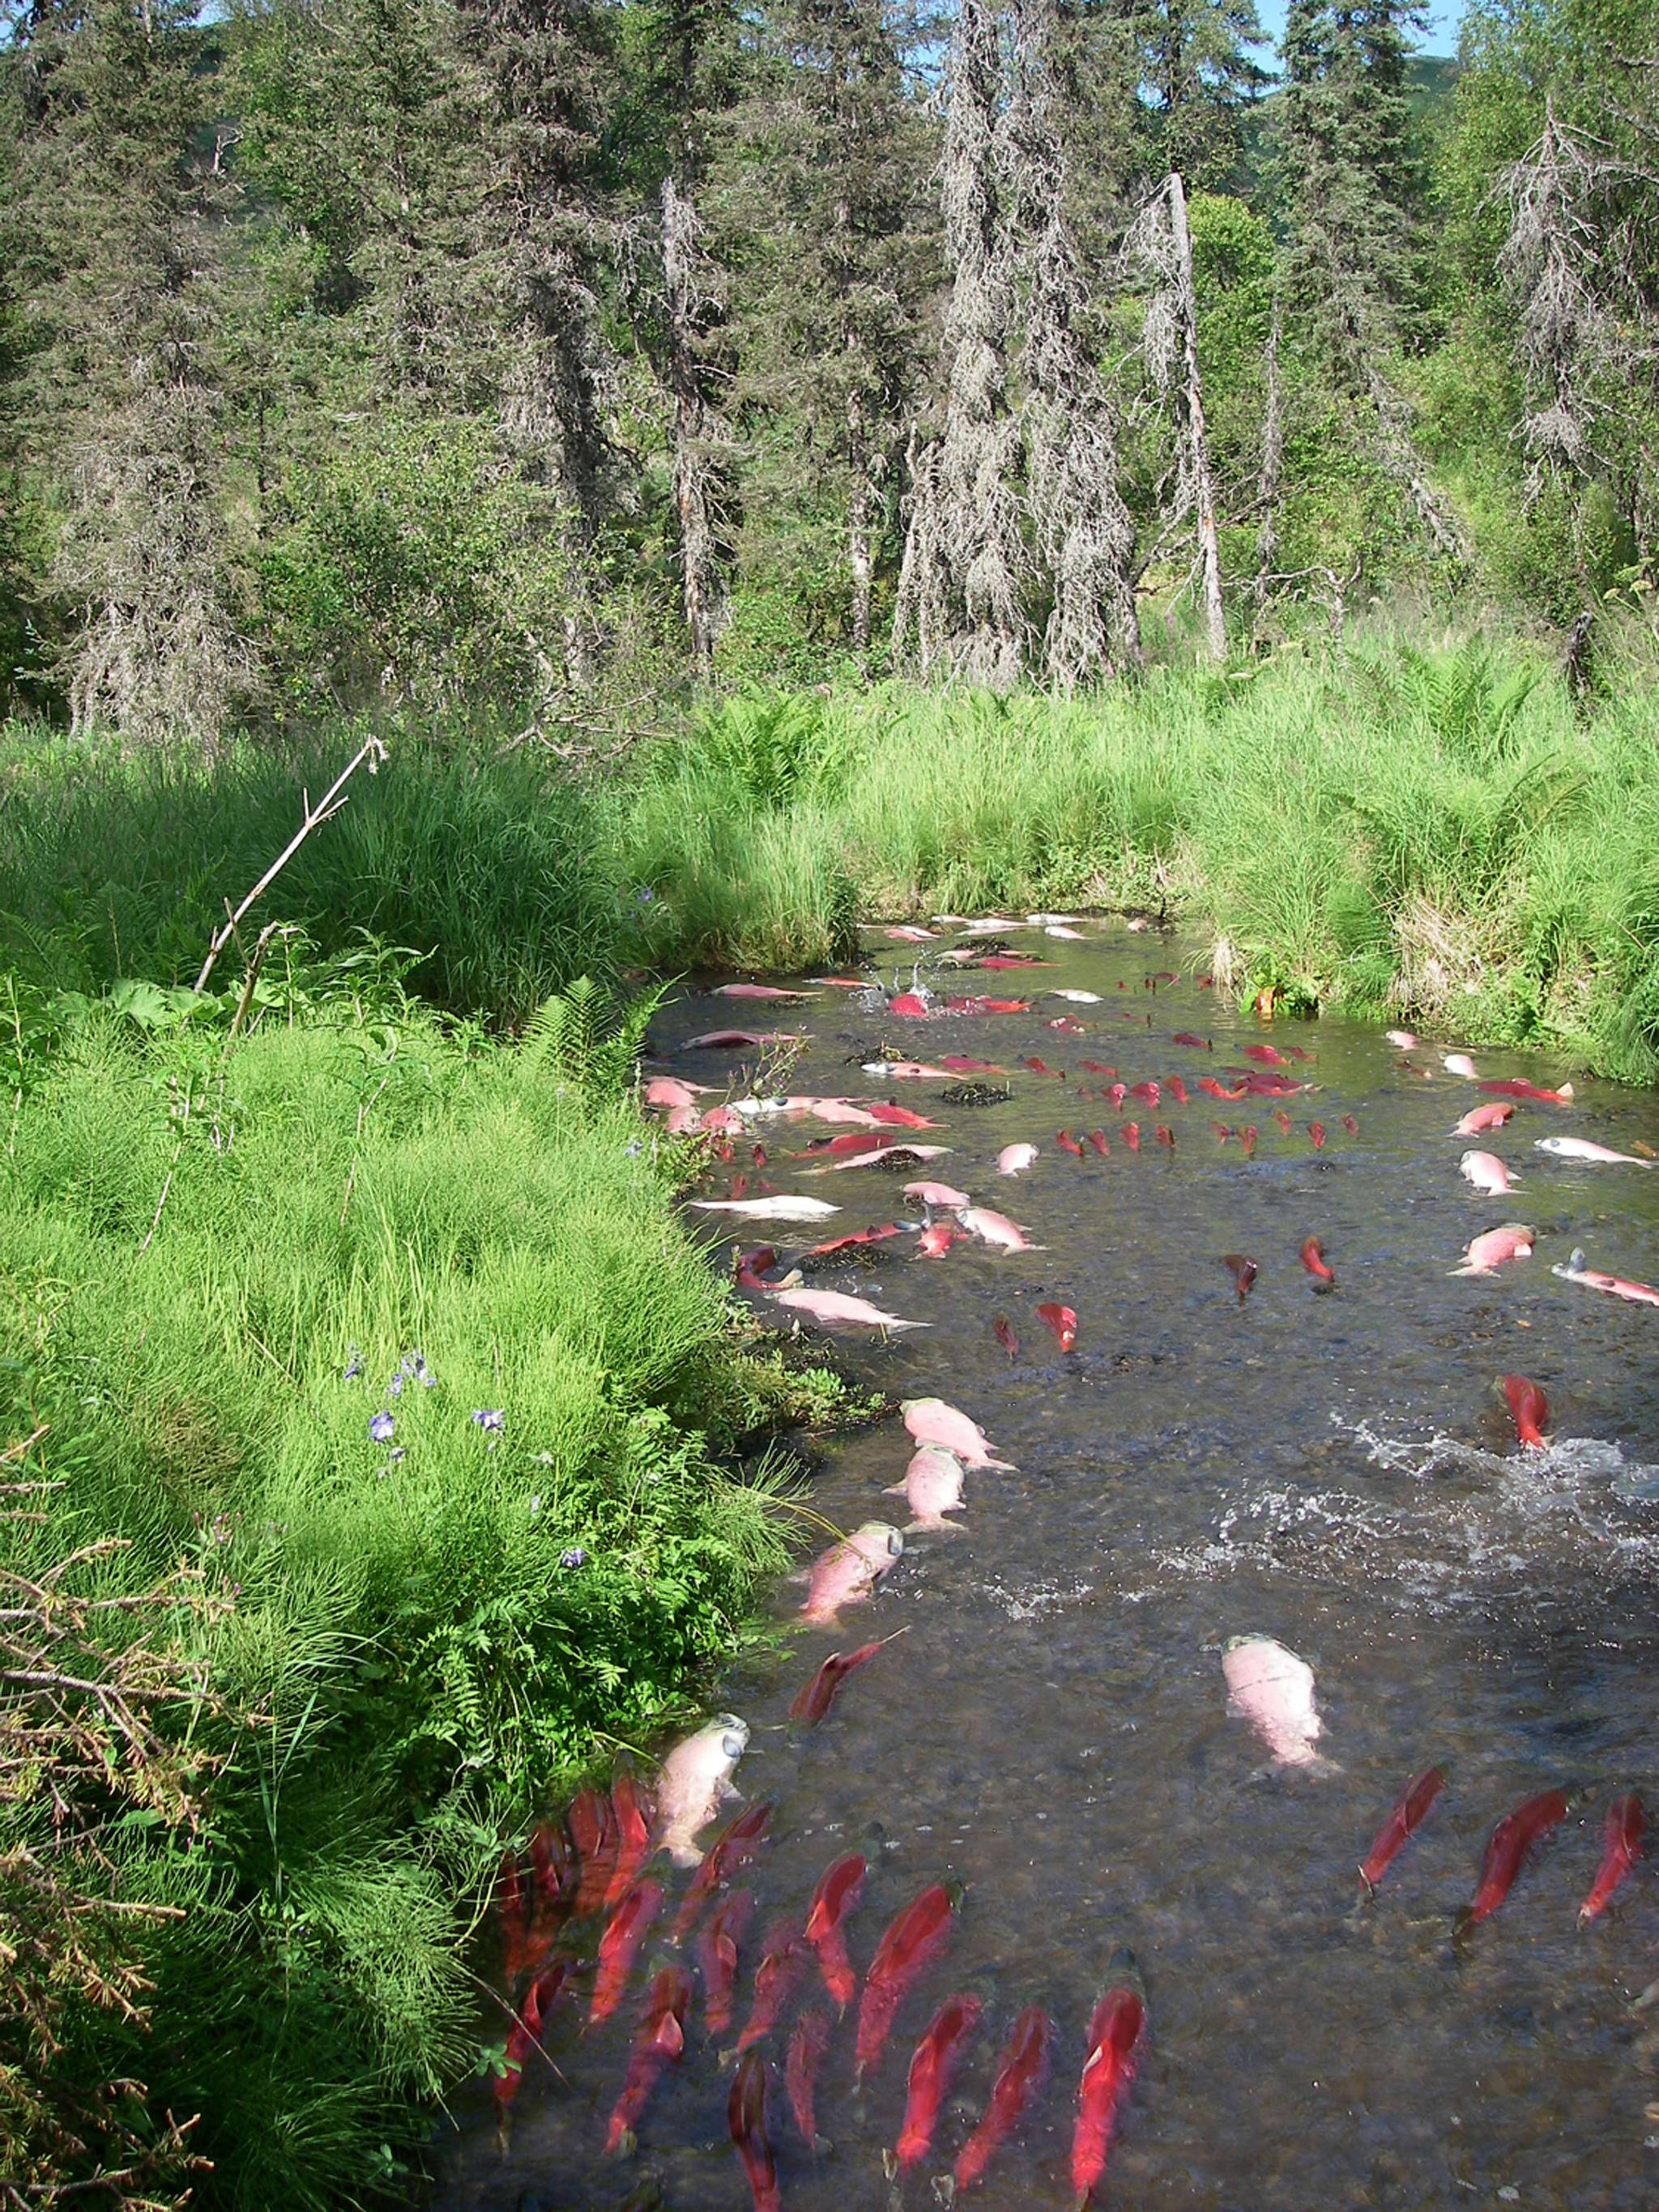 Both live sockeye salmon and fish carcasses are seen in Hansen Creek in 2014. (Courtesy Photo | Tom Quinn via University of Washington)